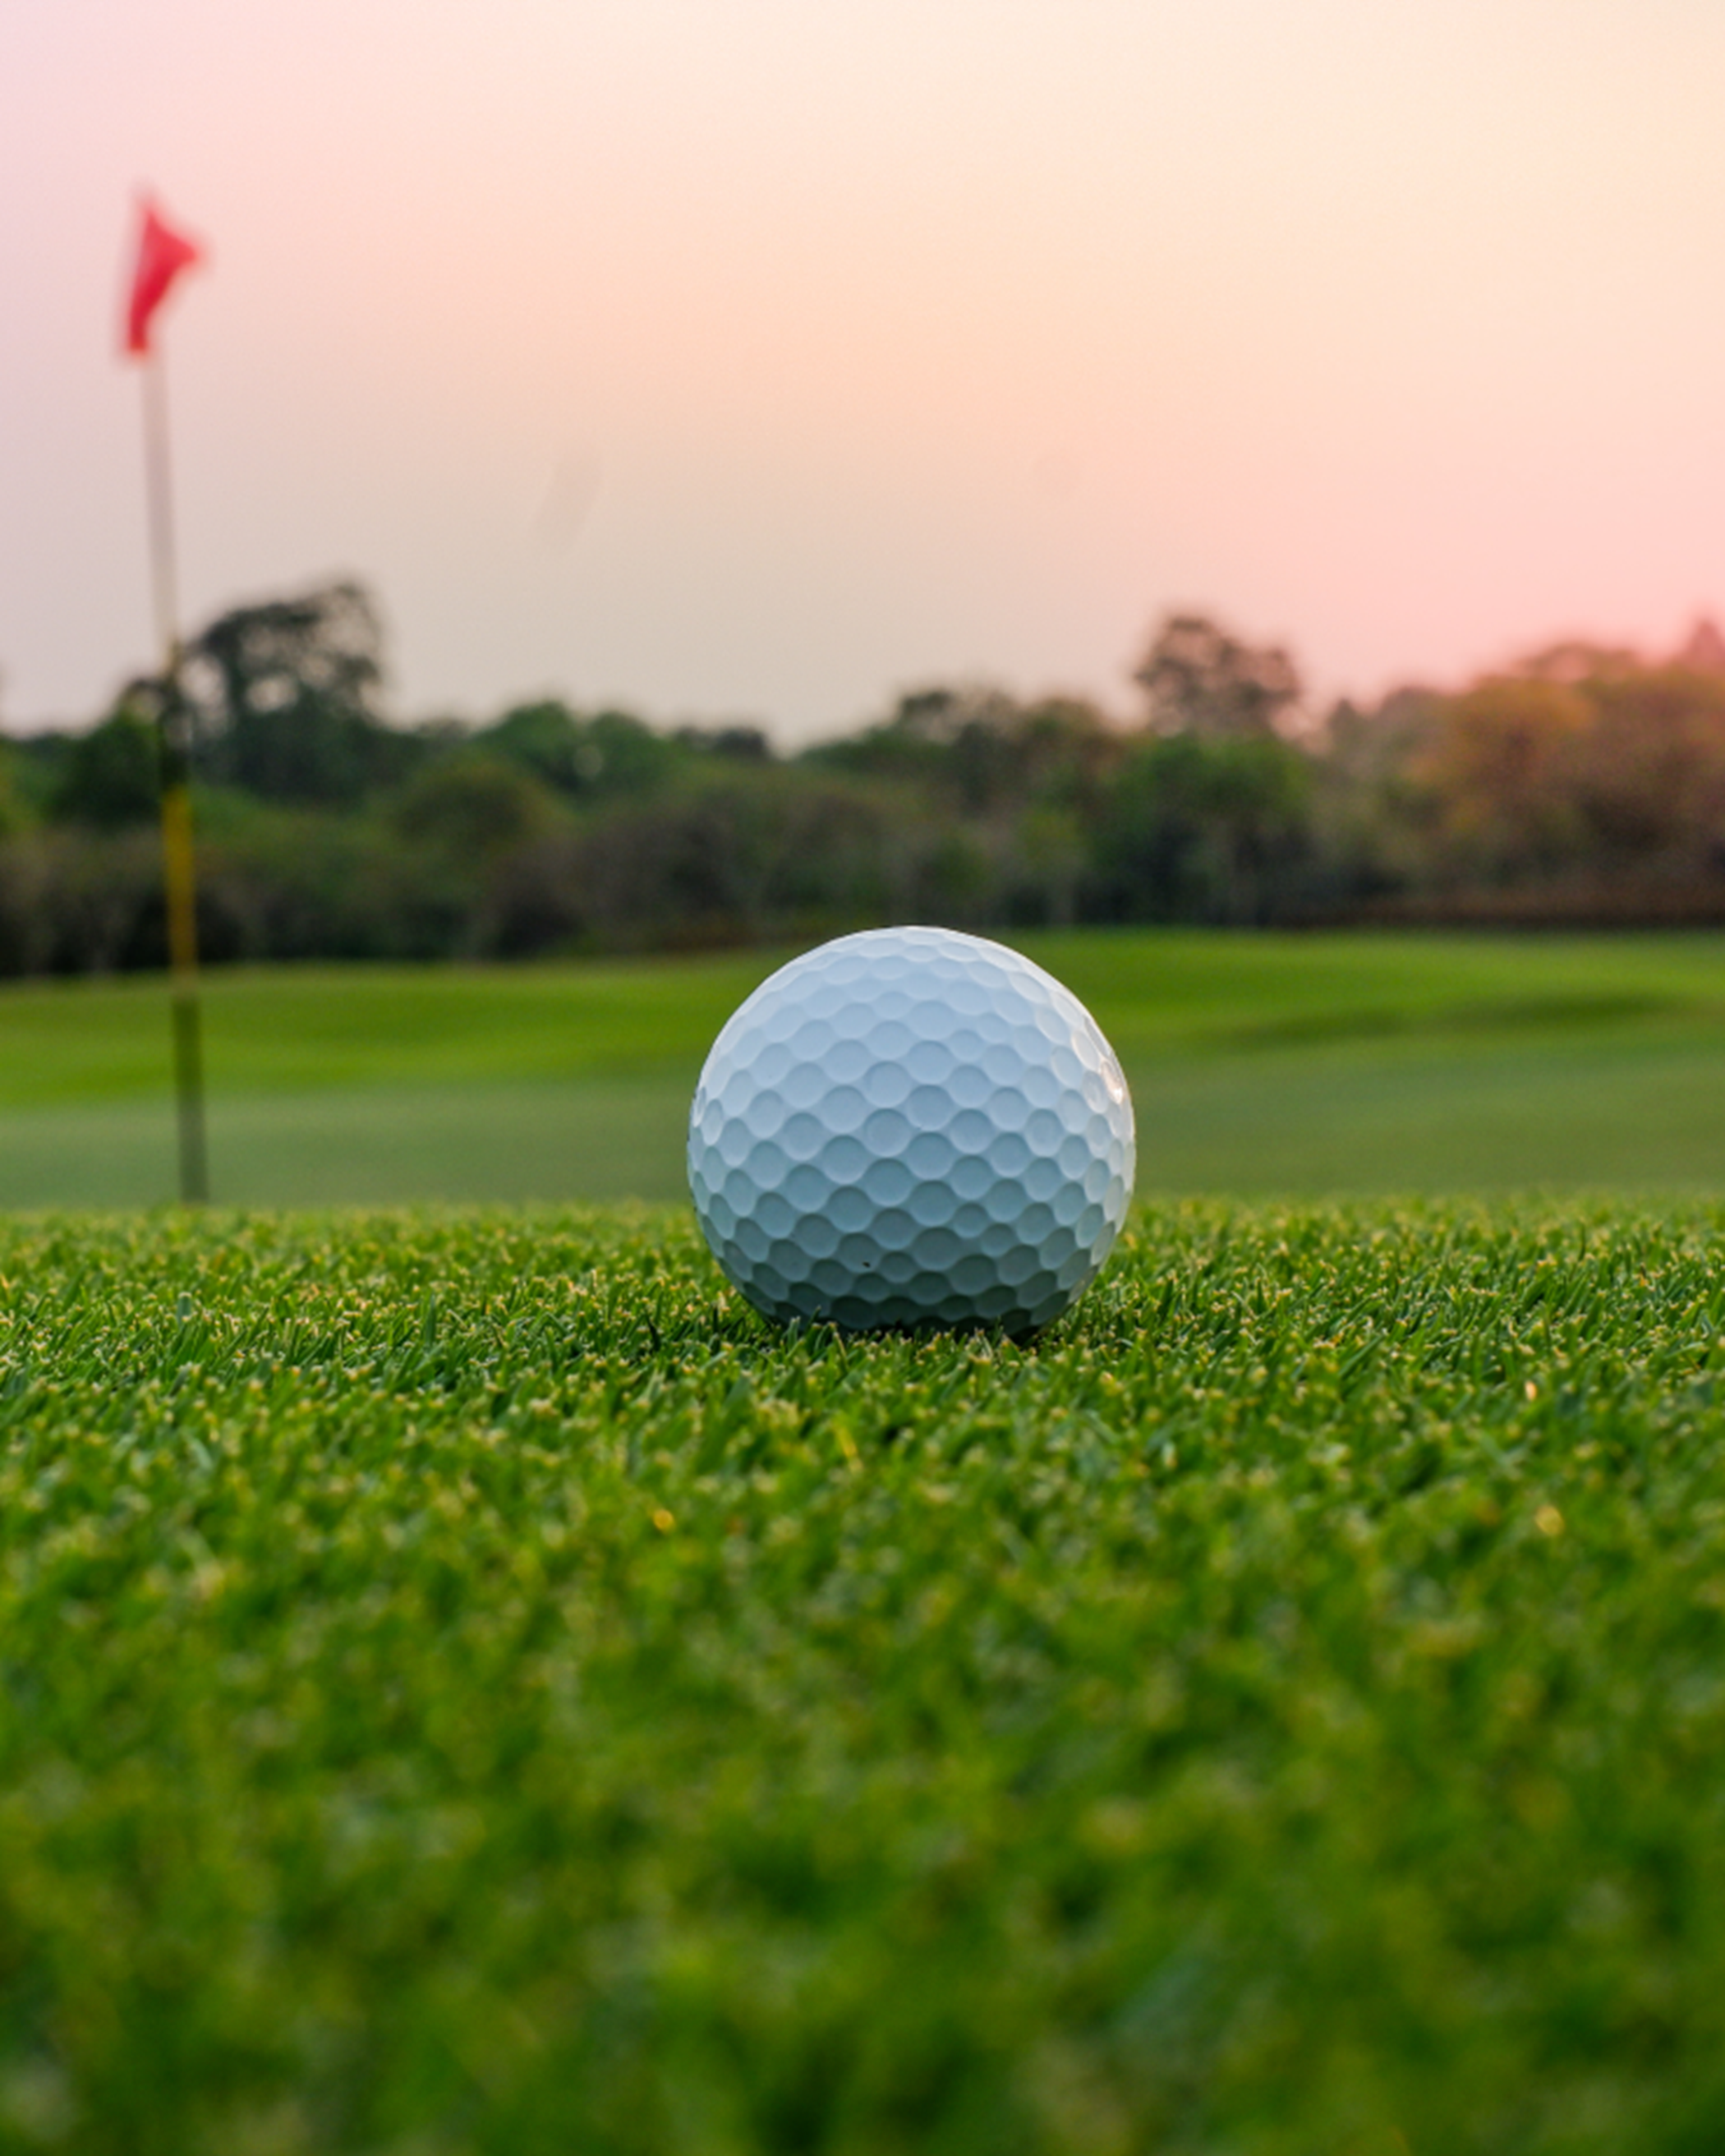 Golf ball on a course